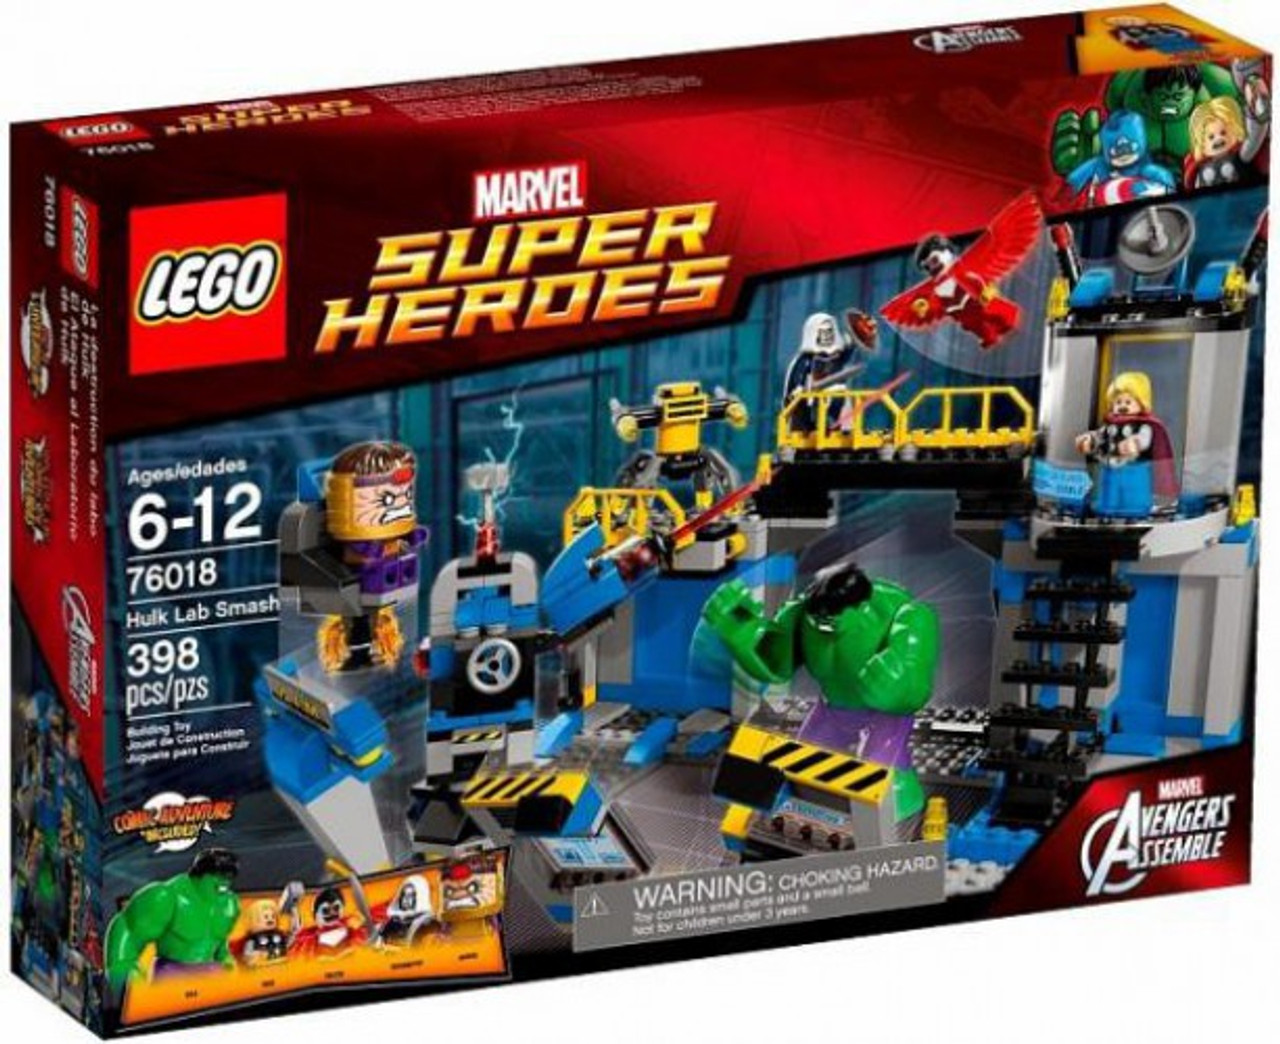 LEGO Marvel Super Heroes Avengers Assemble Hulk Lab Smash Set 76018